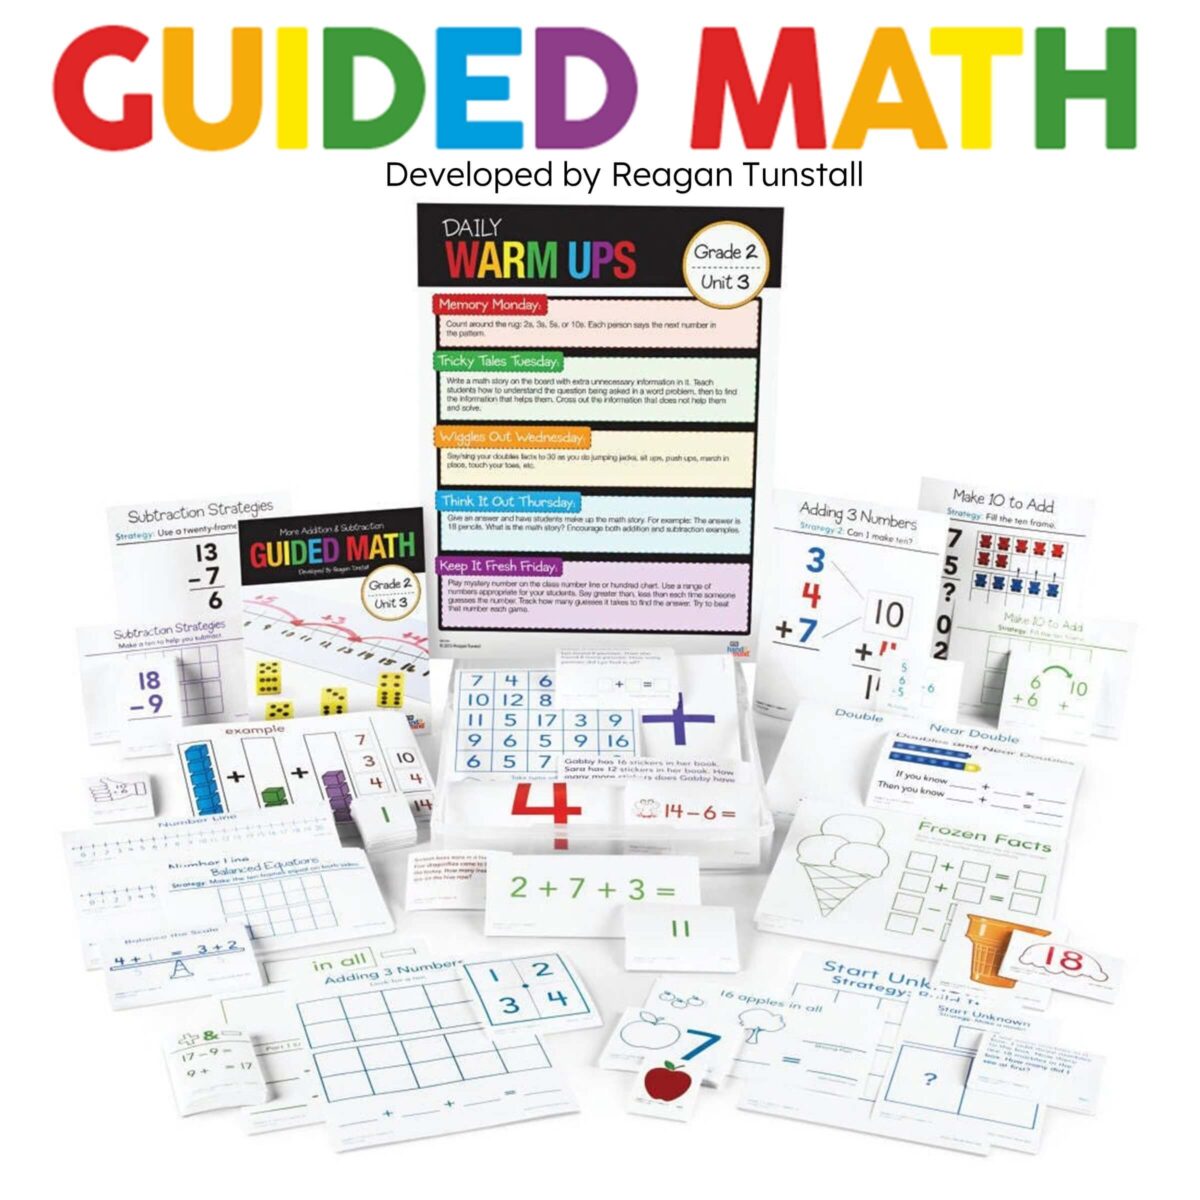 Guided Math hands-on math